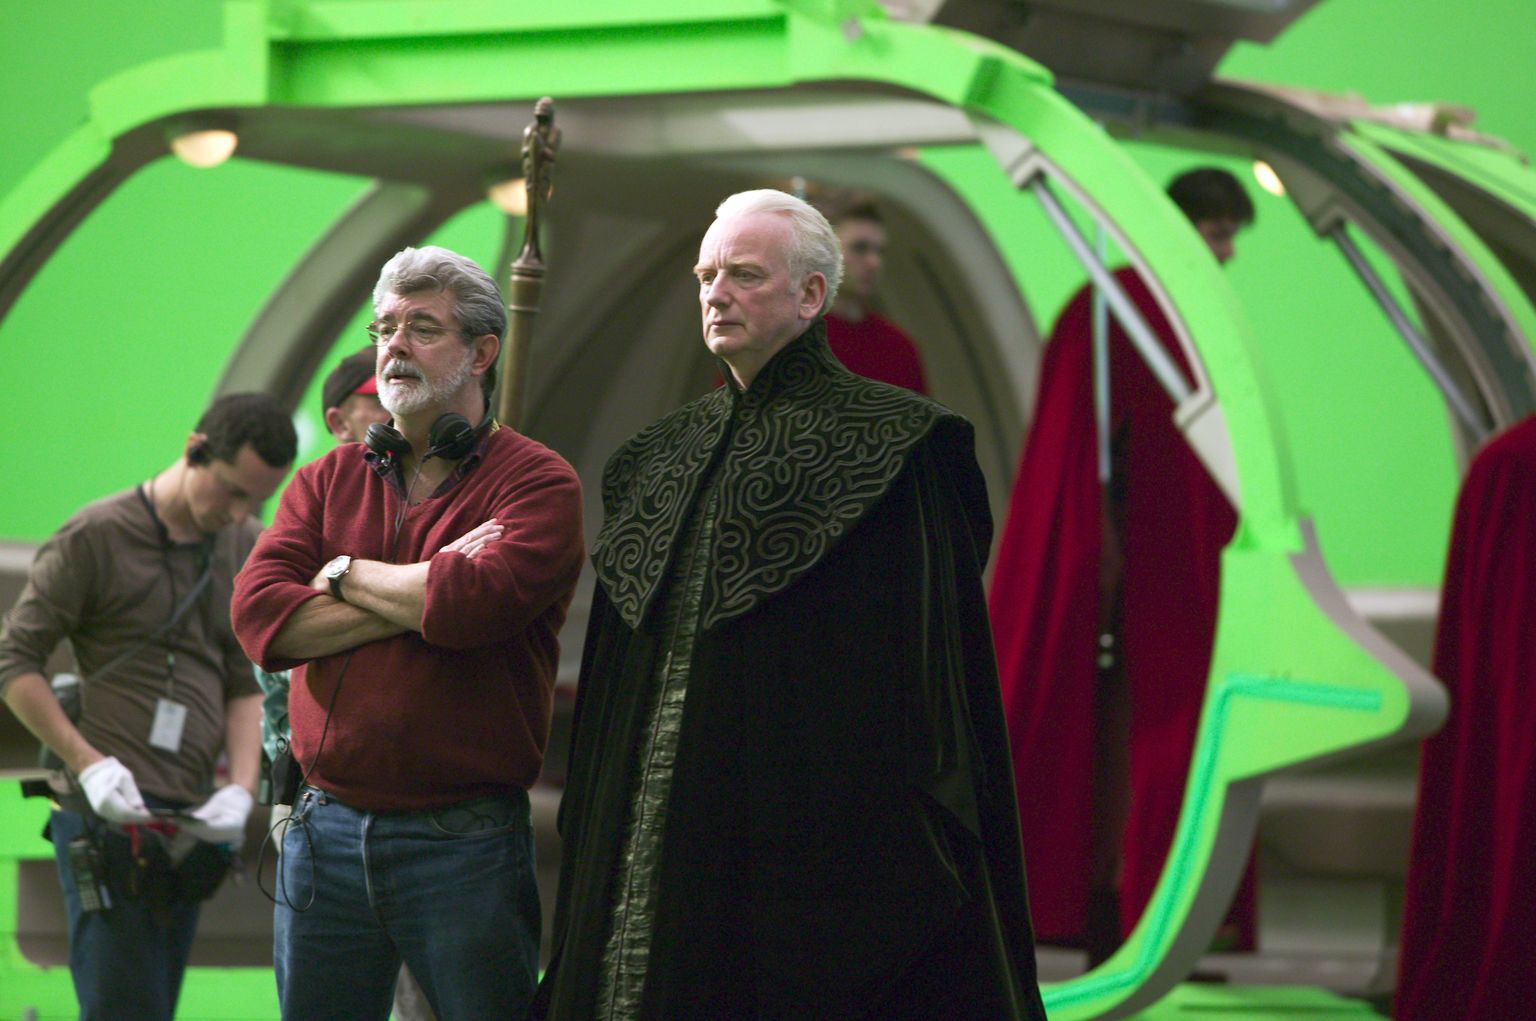 George Lucas and Ian McDiarmid in Zvaigzdziu karai. Situ kerstas (2005)